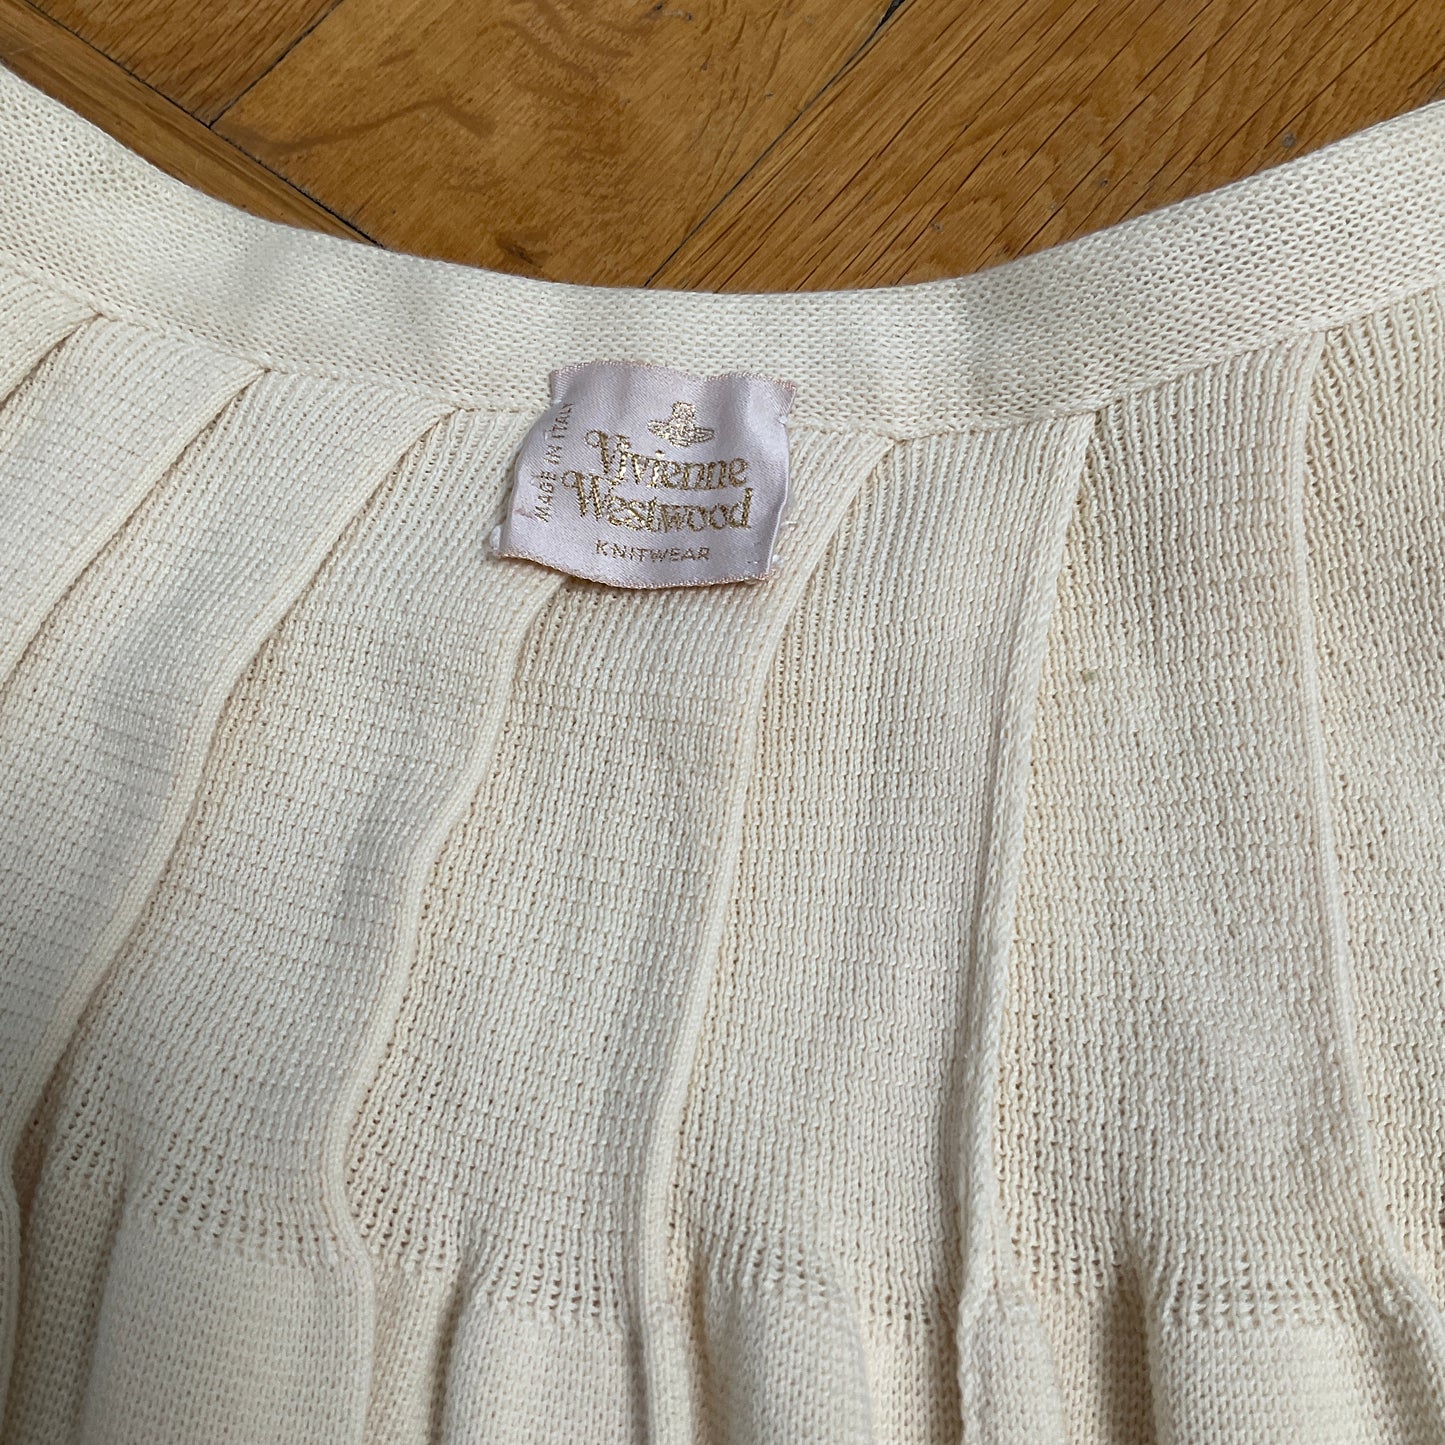 90s Vivienne Westwood knit skirt